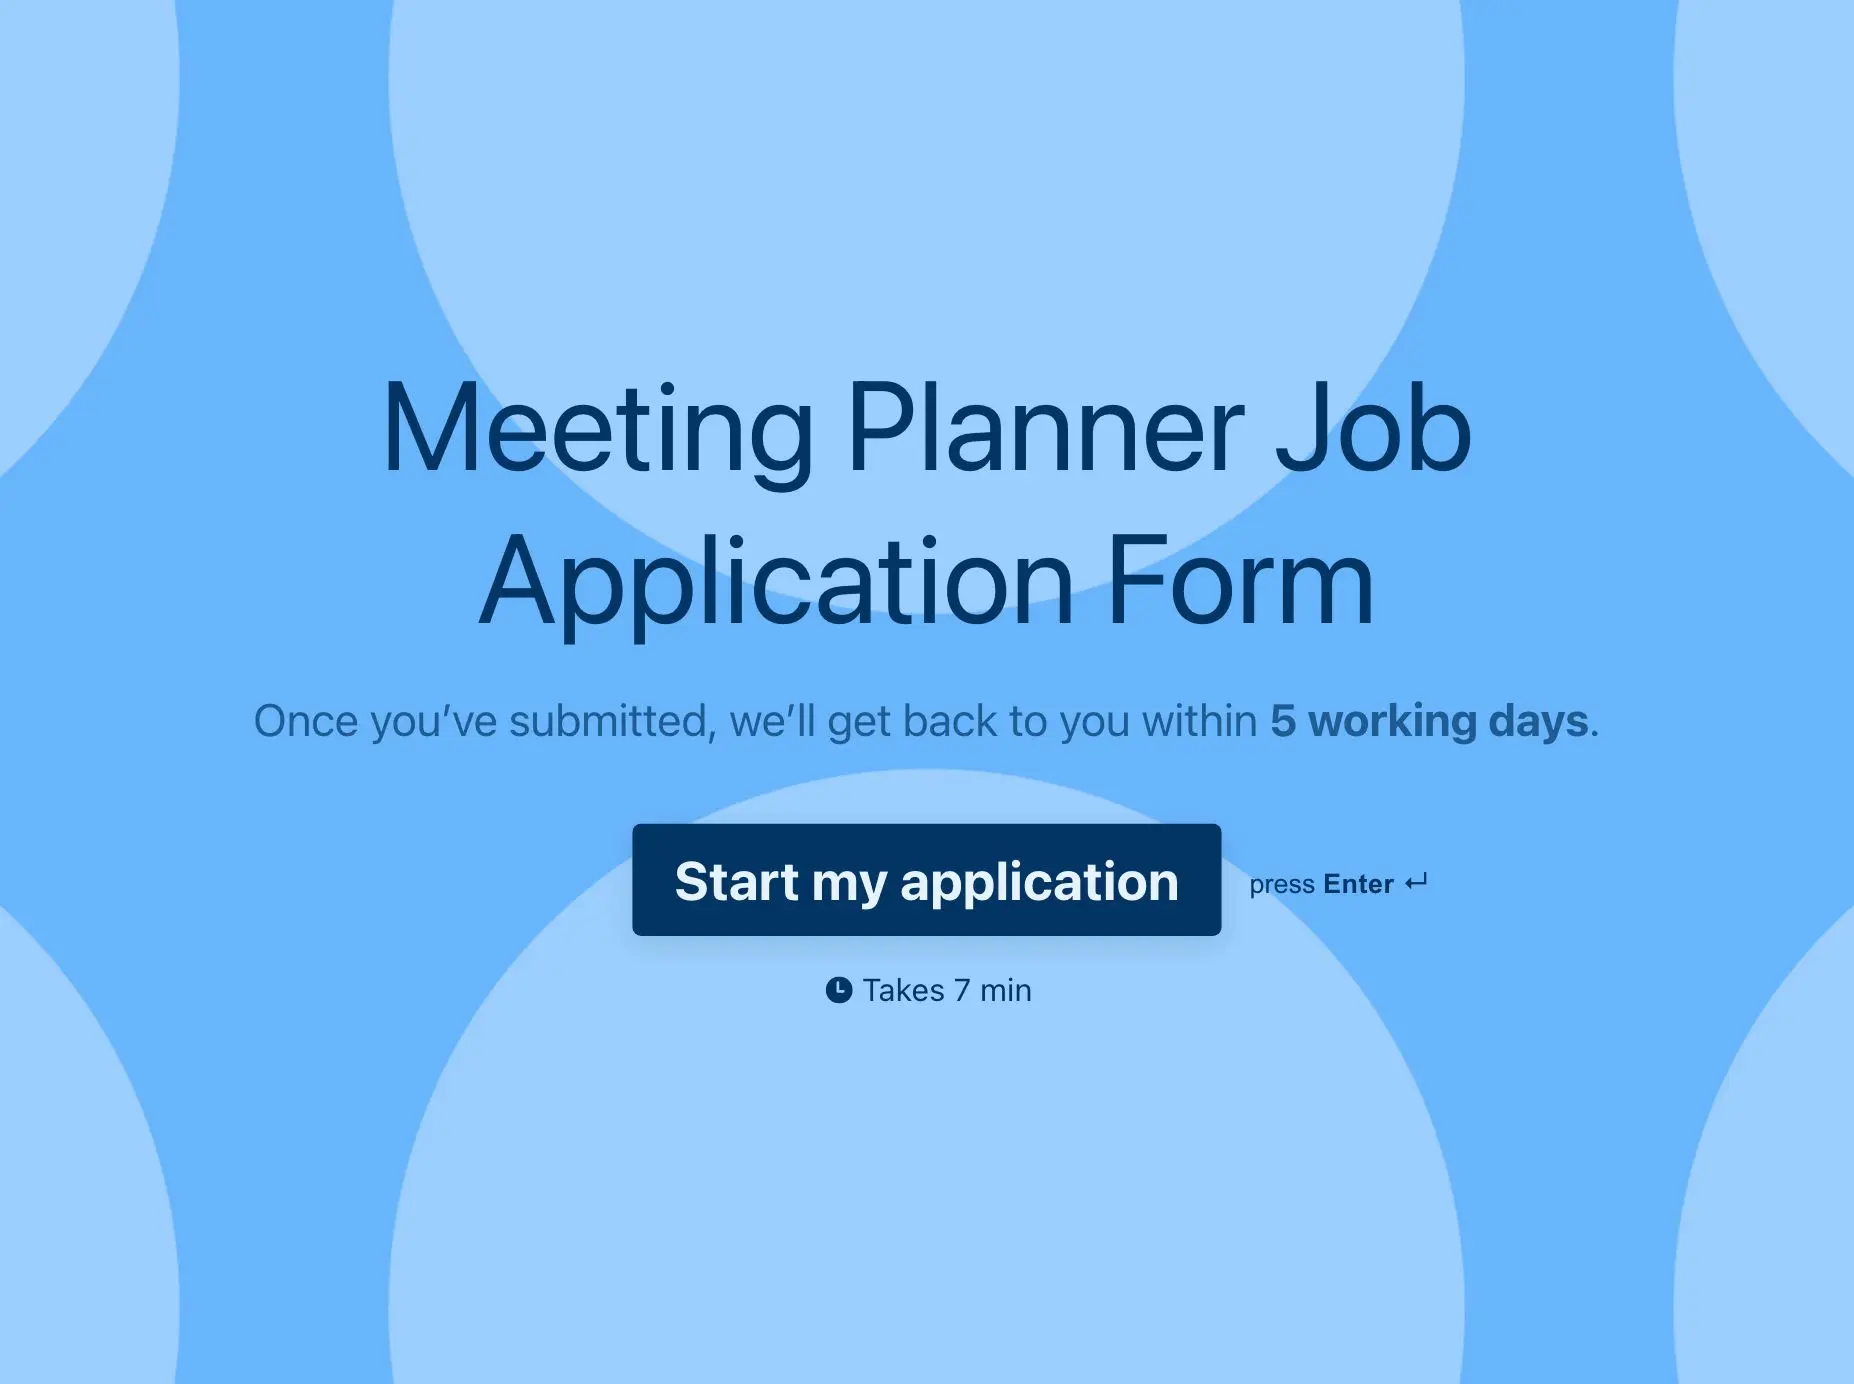 Meeting Planner Job Application Form Template Hero